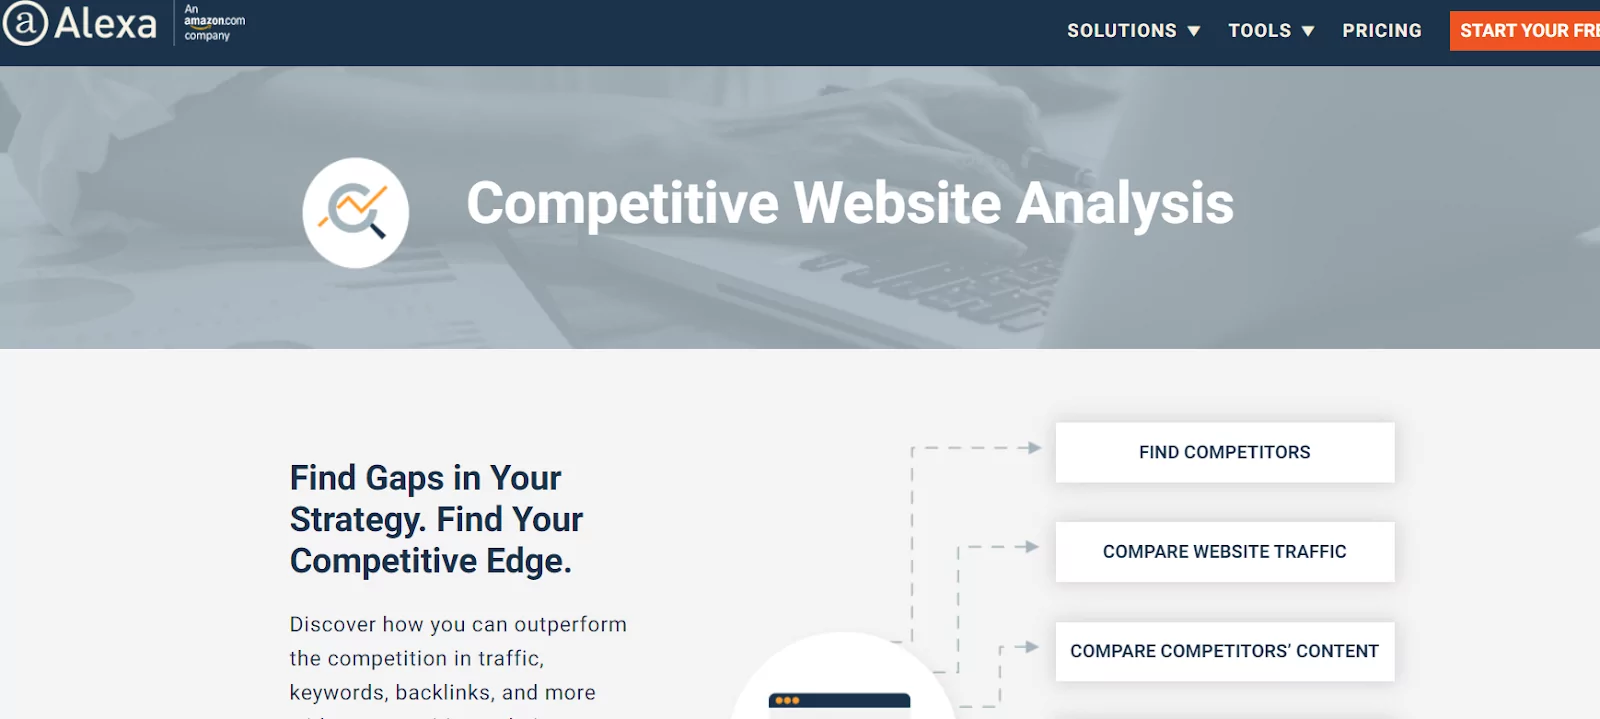 Alexa competitive website analysis